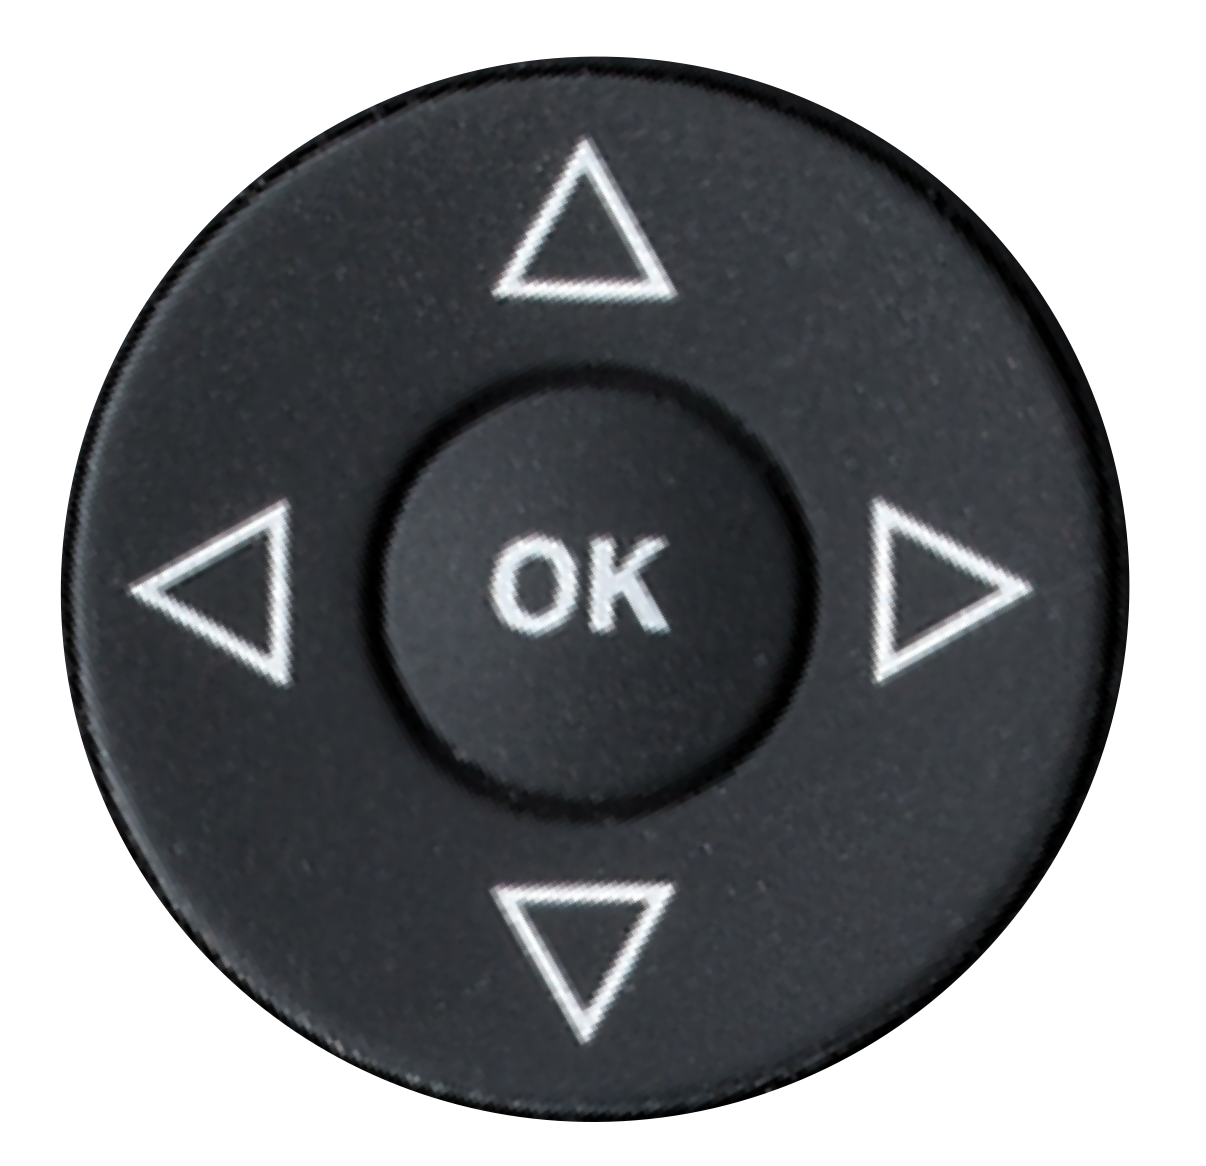 TiVo remote OK and Arrow buttons